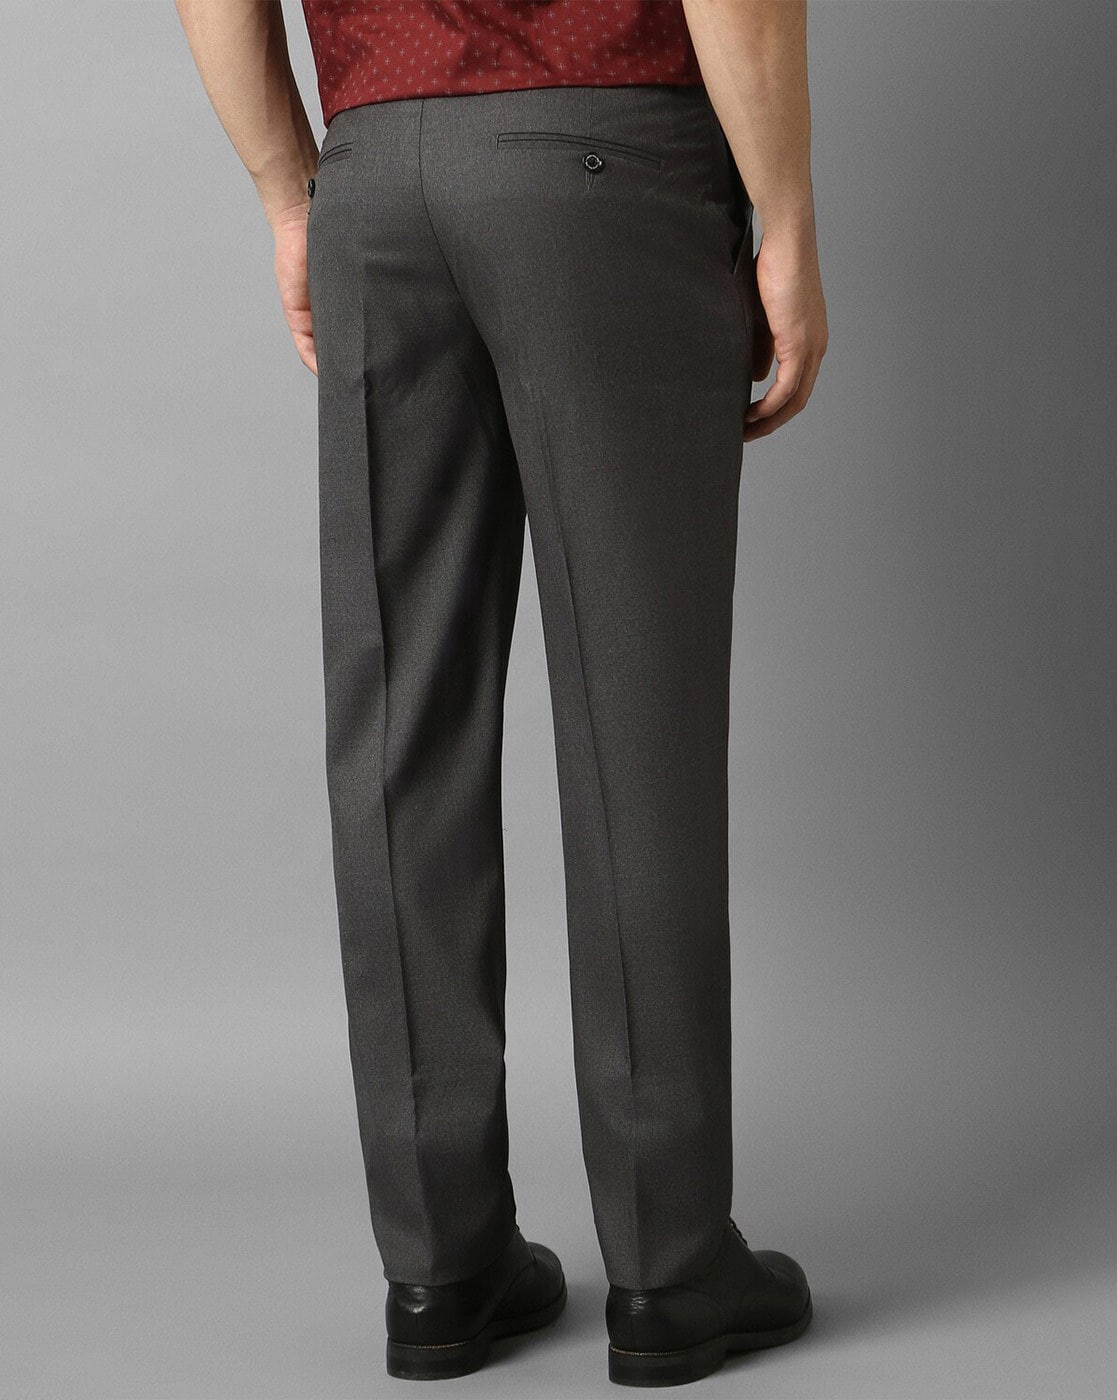 Men's pants chinos - light grey P894 | MODONE wholesale - Clothing For Men